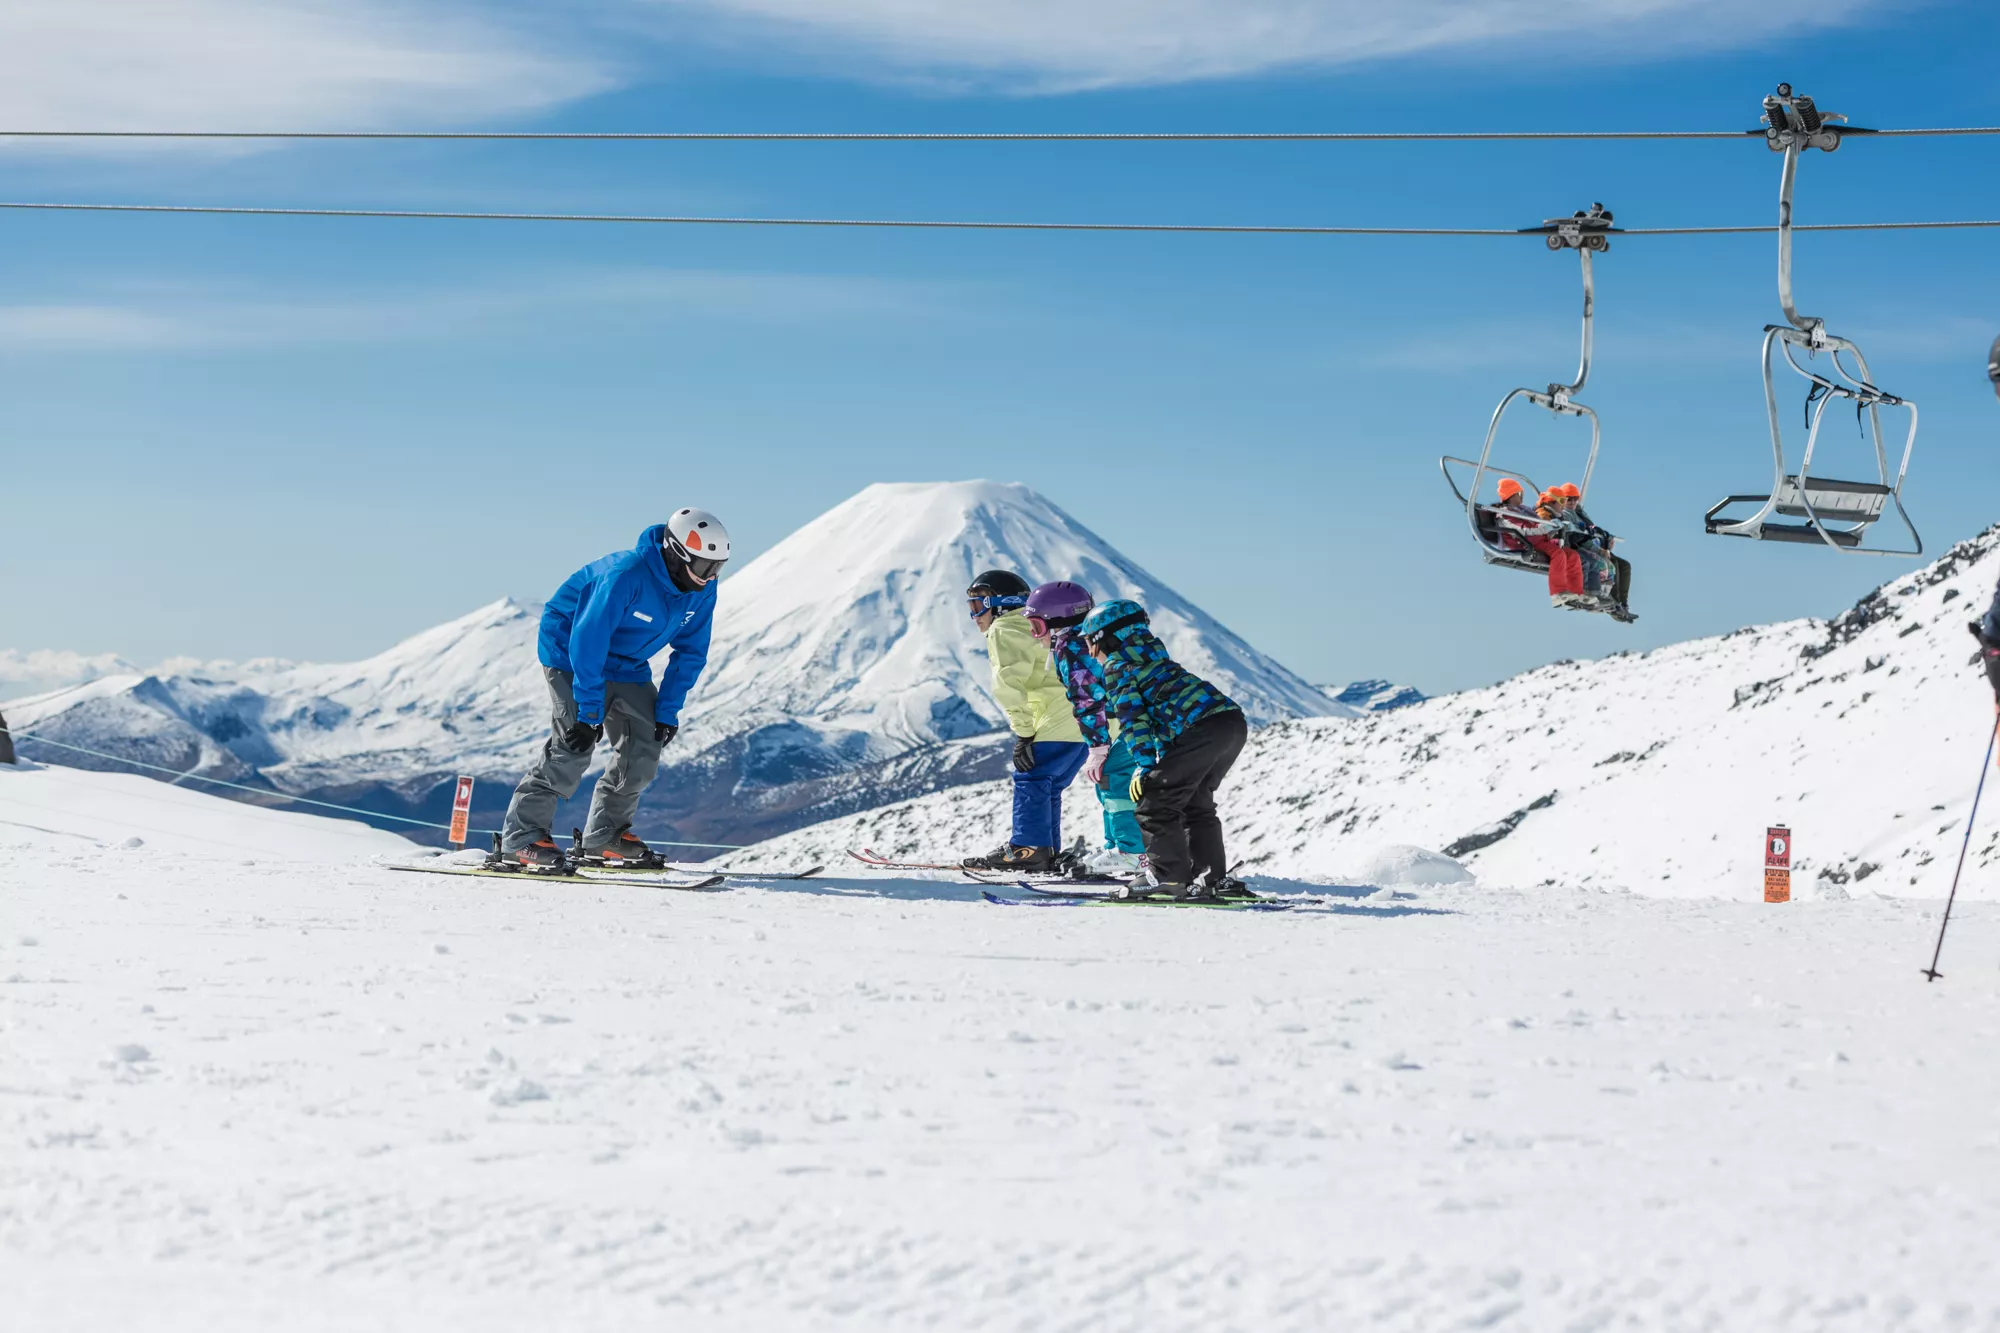 Turoa in New Zealand, Australia and Oceania | Snowboarding,Skiing - Rated 3.8